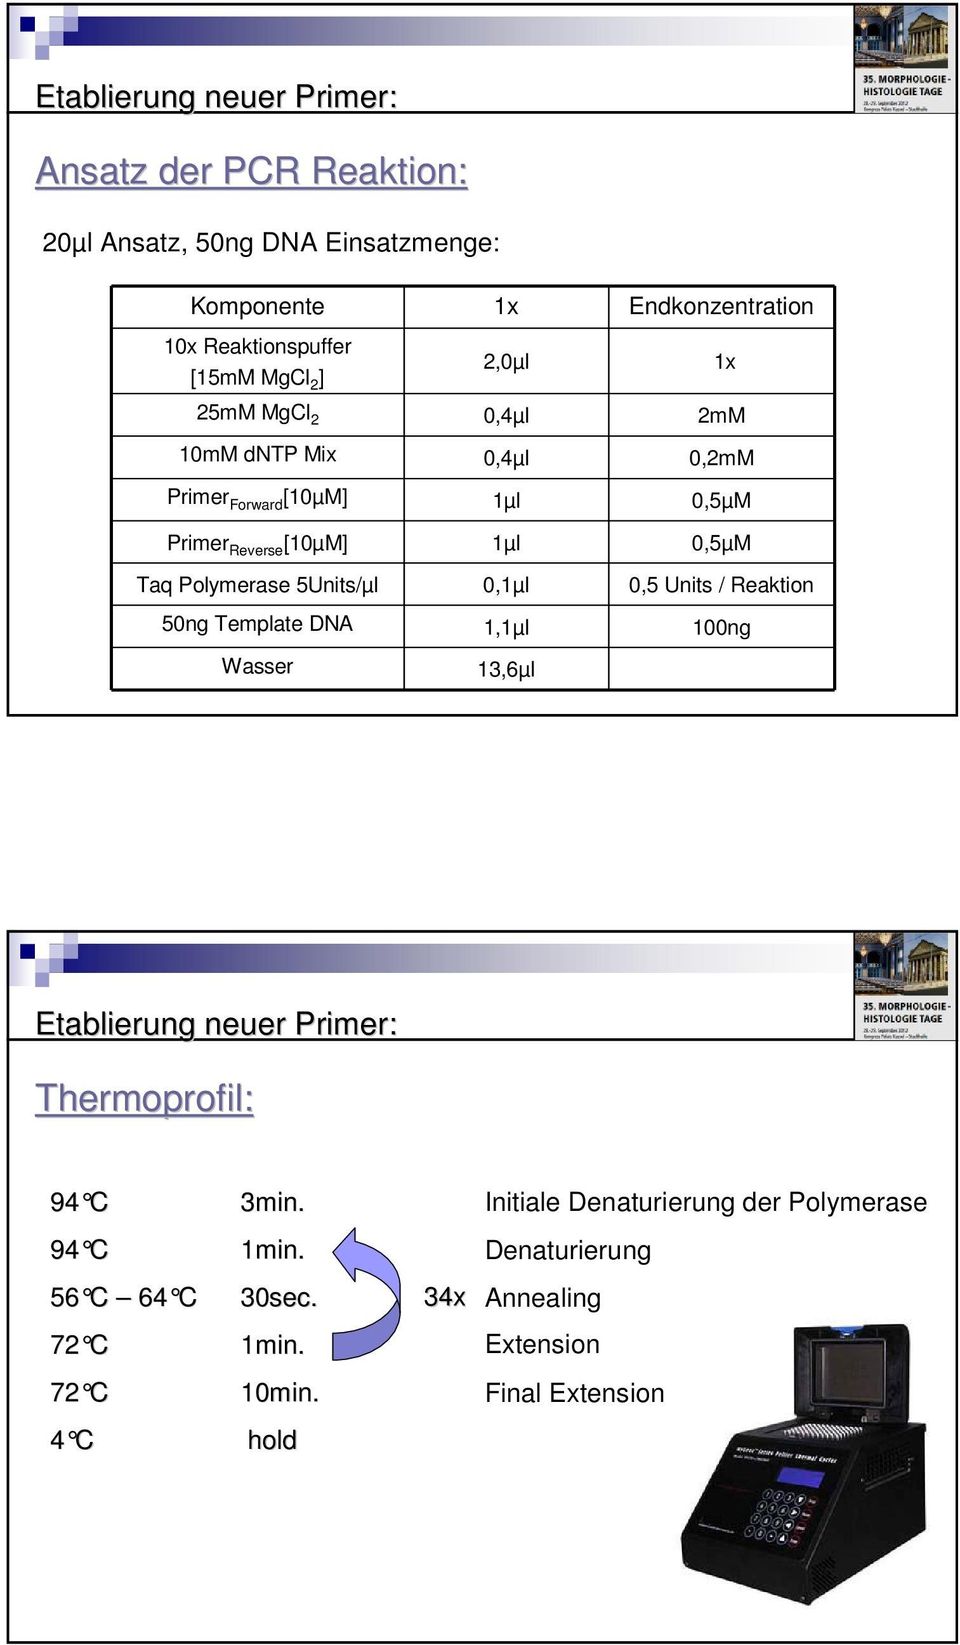 Polymerase 5Units/µl 0,1µl 0,5 Units / Reaktion 50ng Template DNA 1,1µl 100ng 1x Wasser 13,6µl Etablierung neuer Primer: Thermoprofil: 94 C